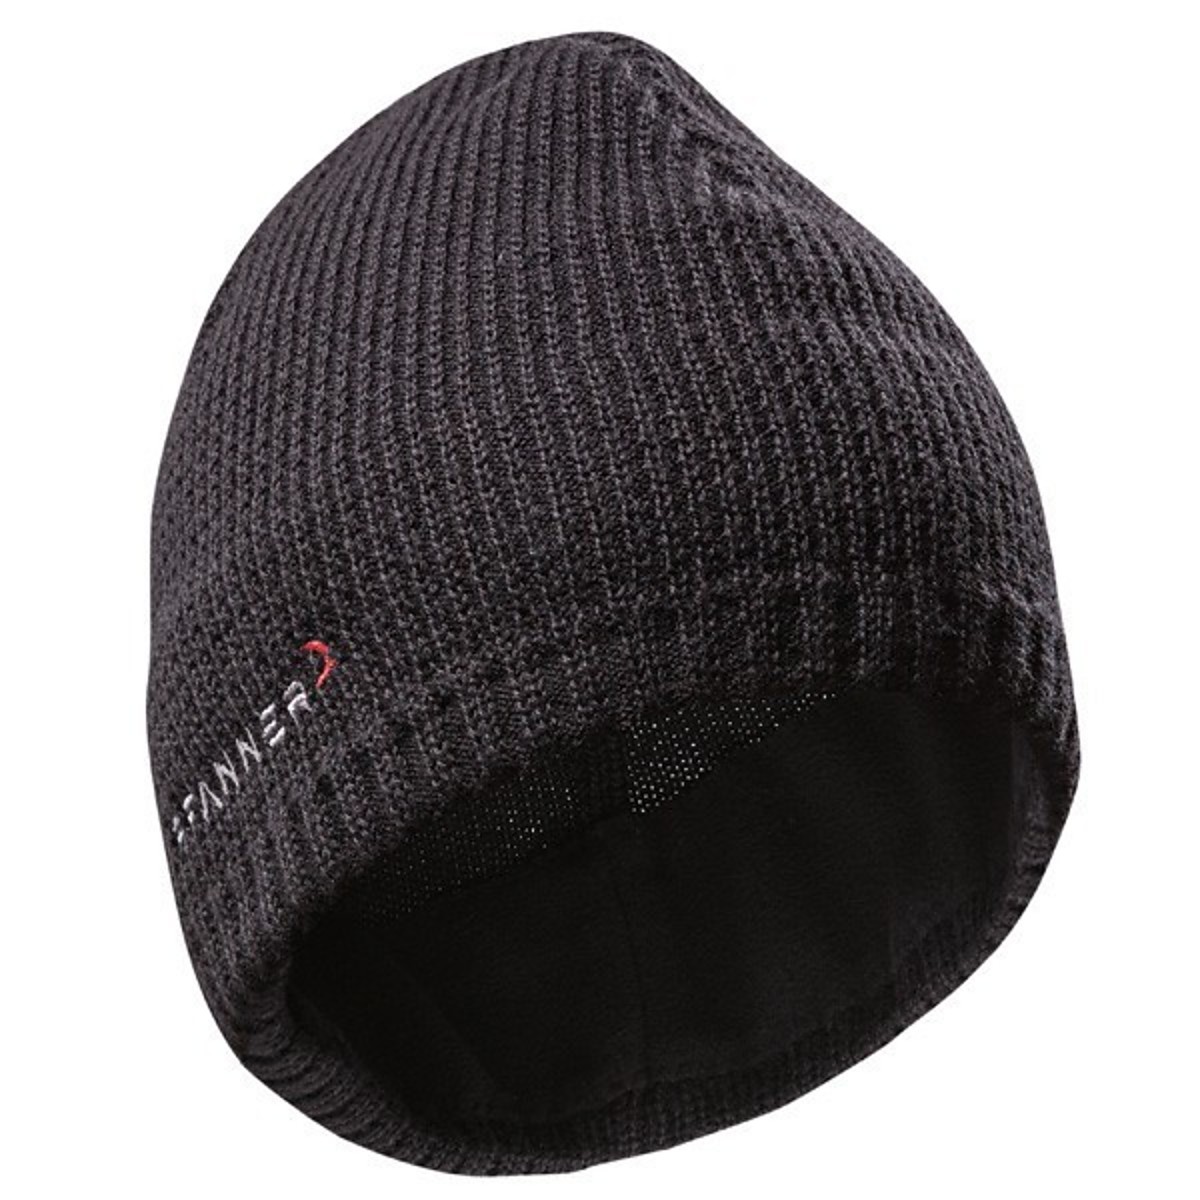 Pfanner hat with Merino wool logo